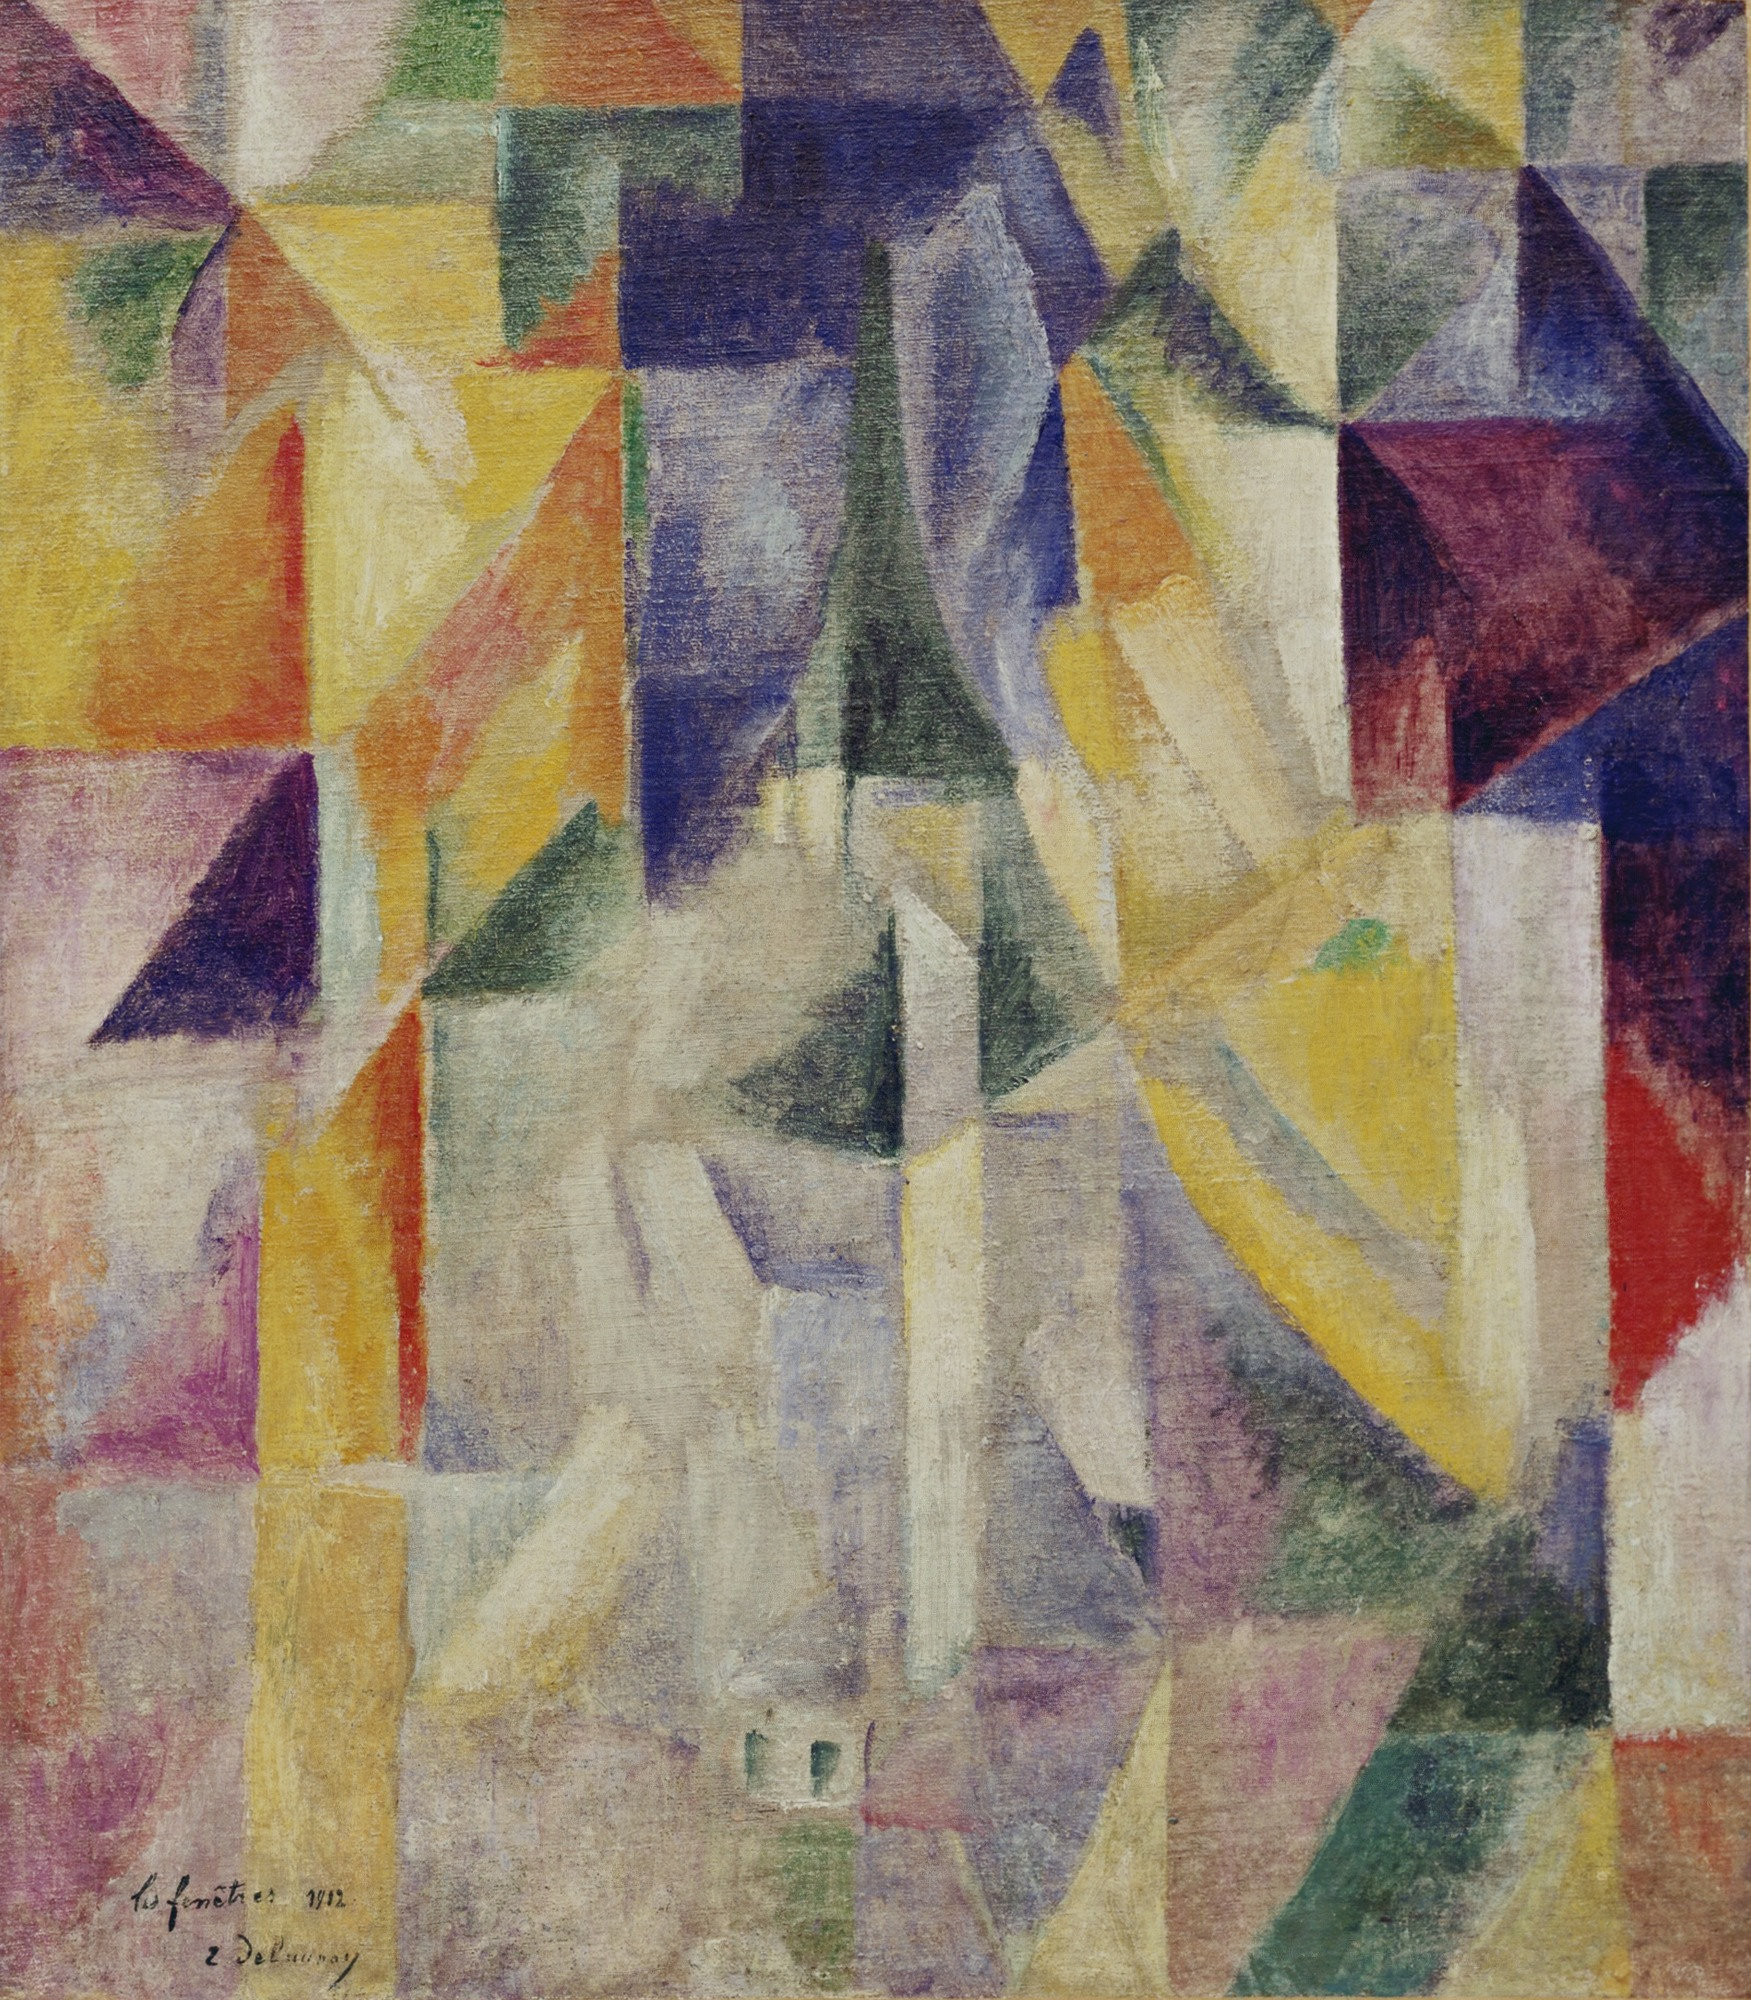 Робер Делоне, "Окна", 1912